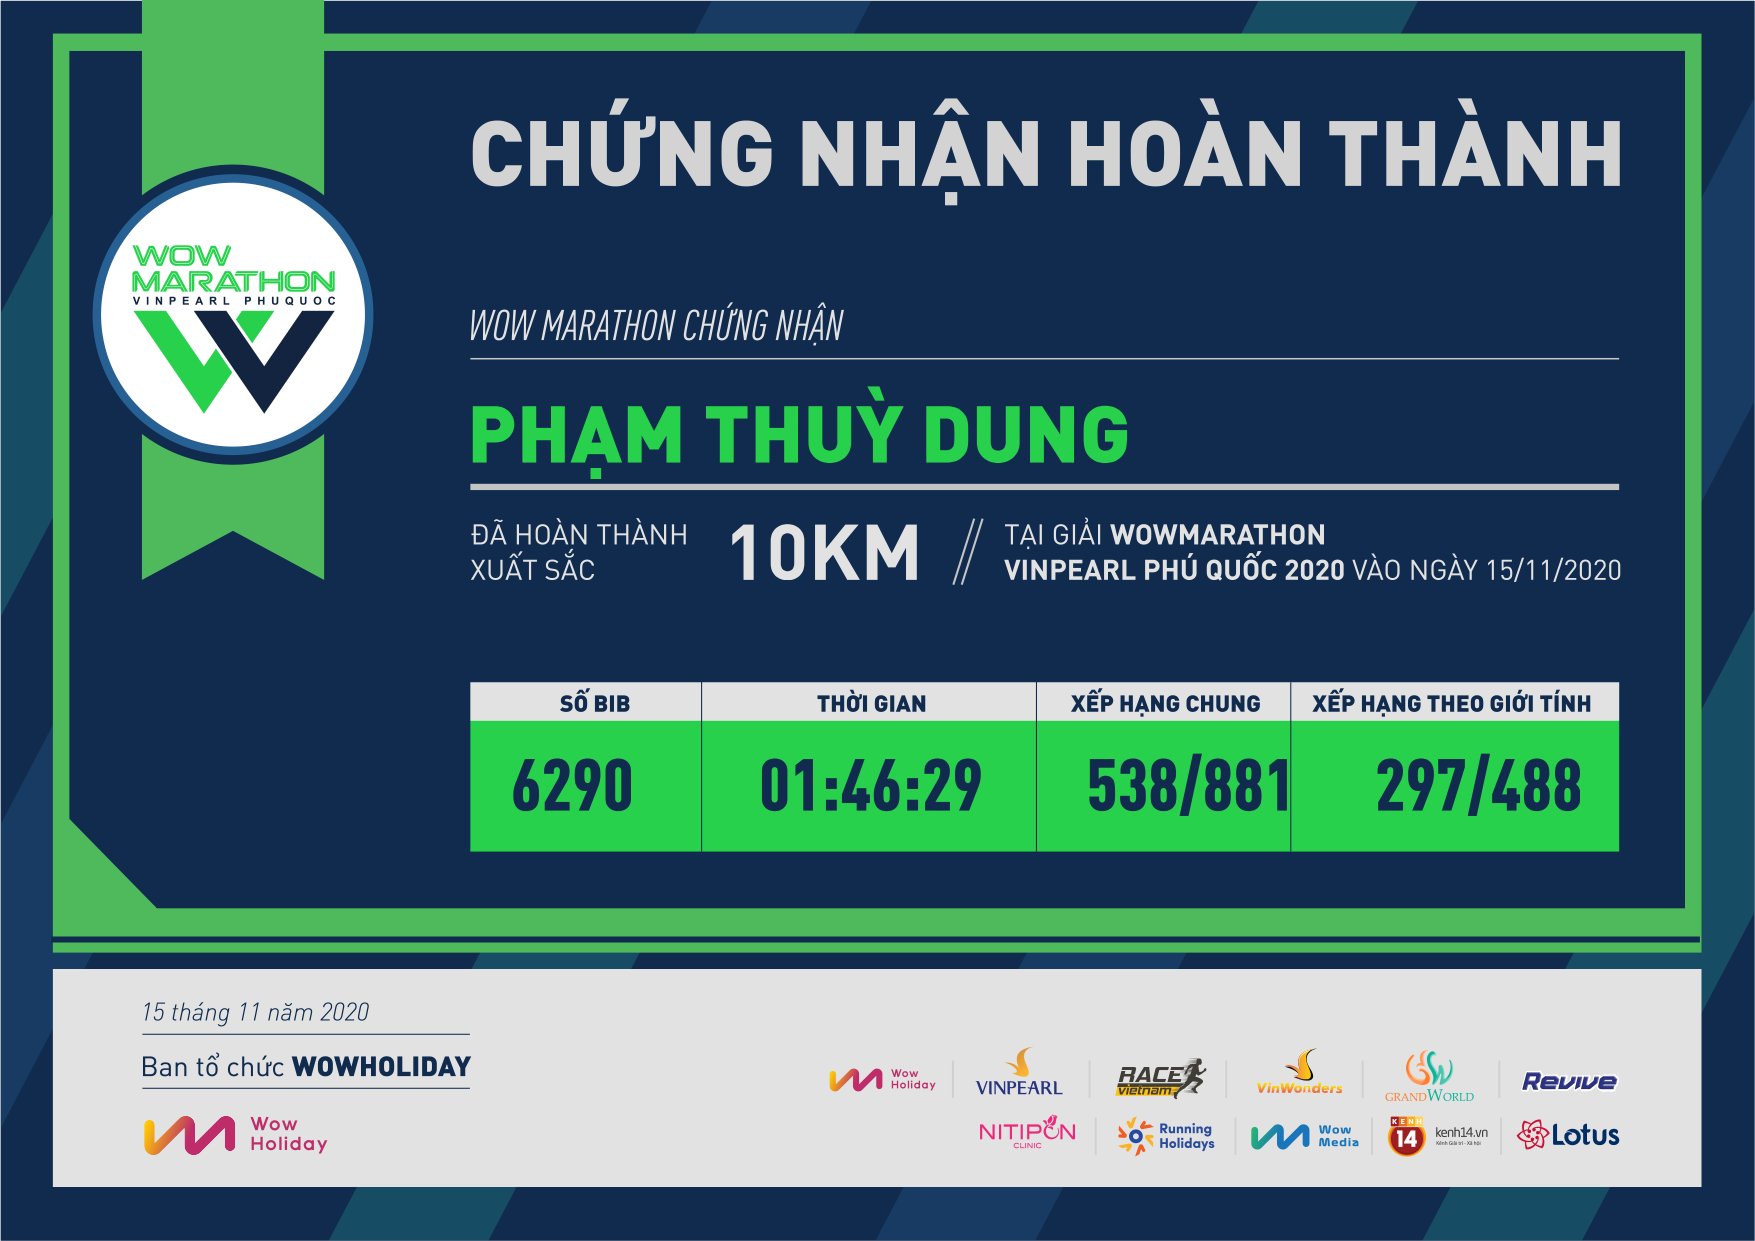 6290 - Phạm Thuỳ Dung